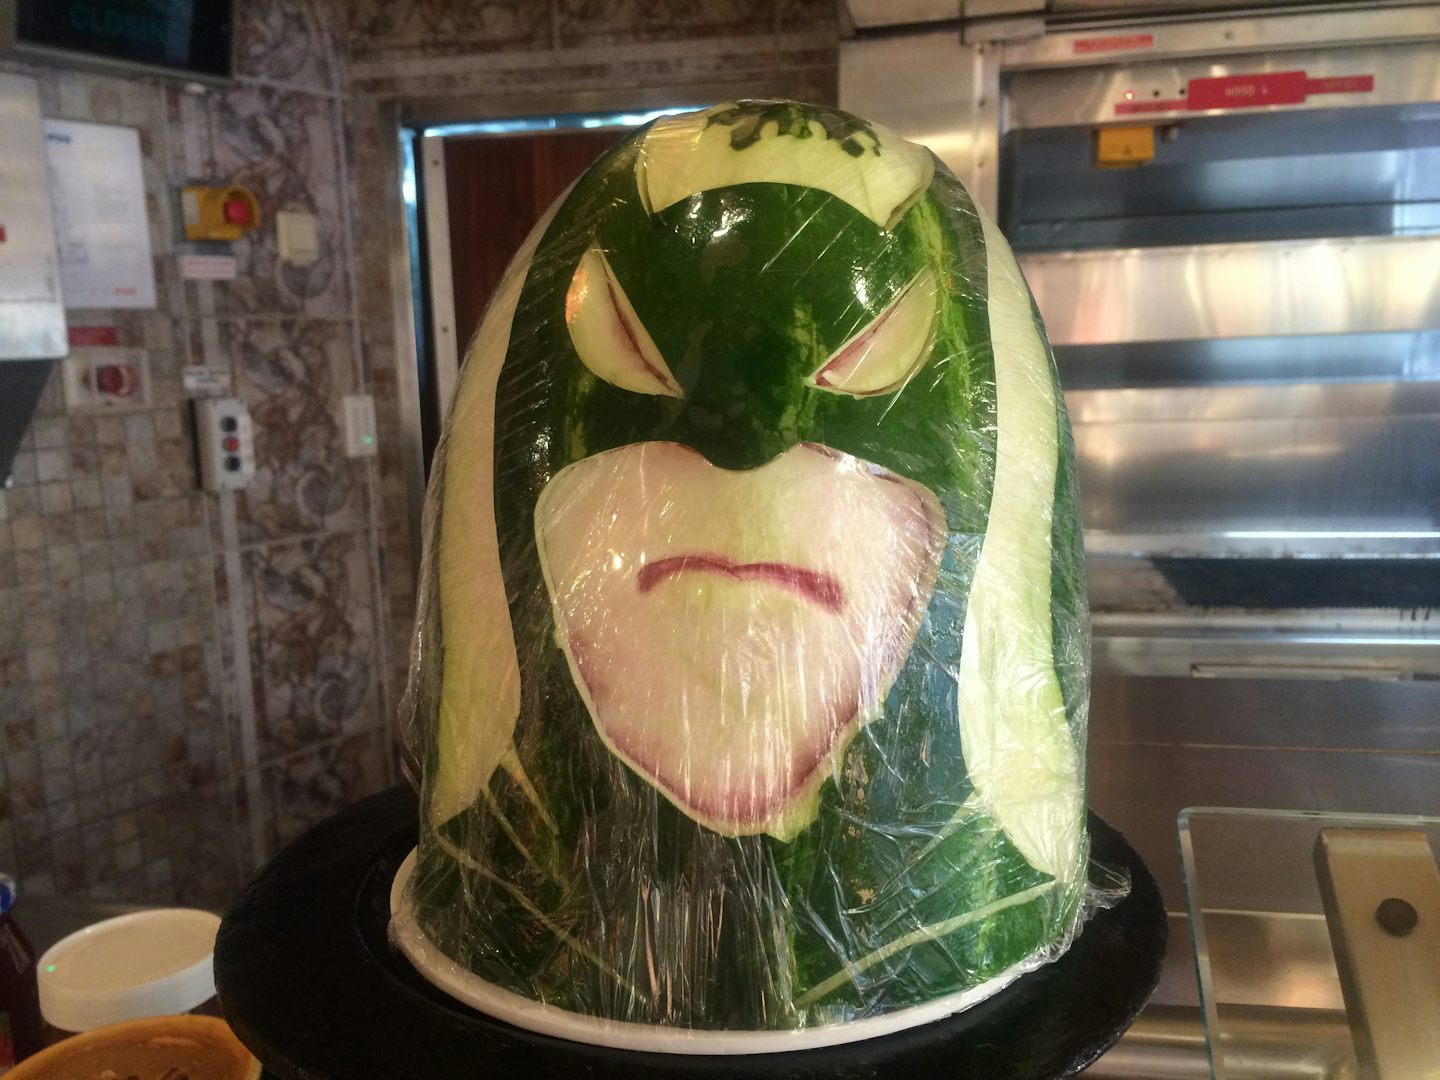 Batman watermelon